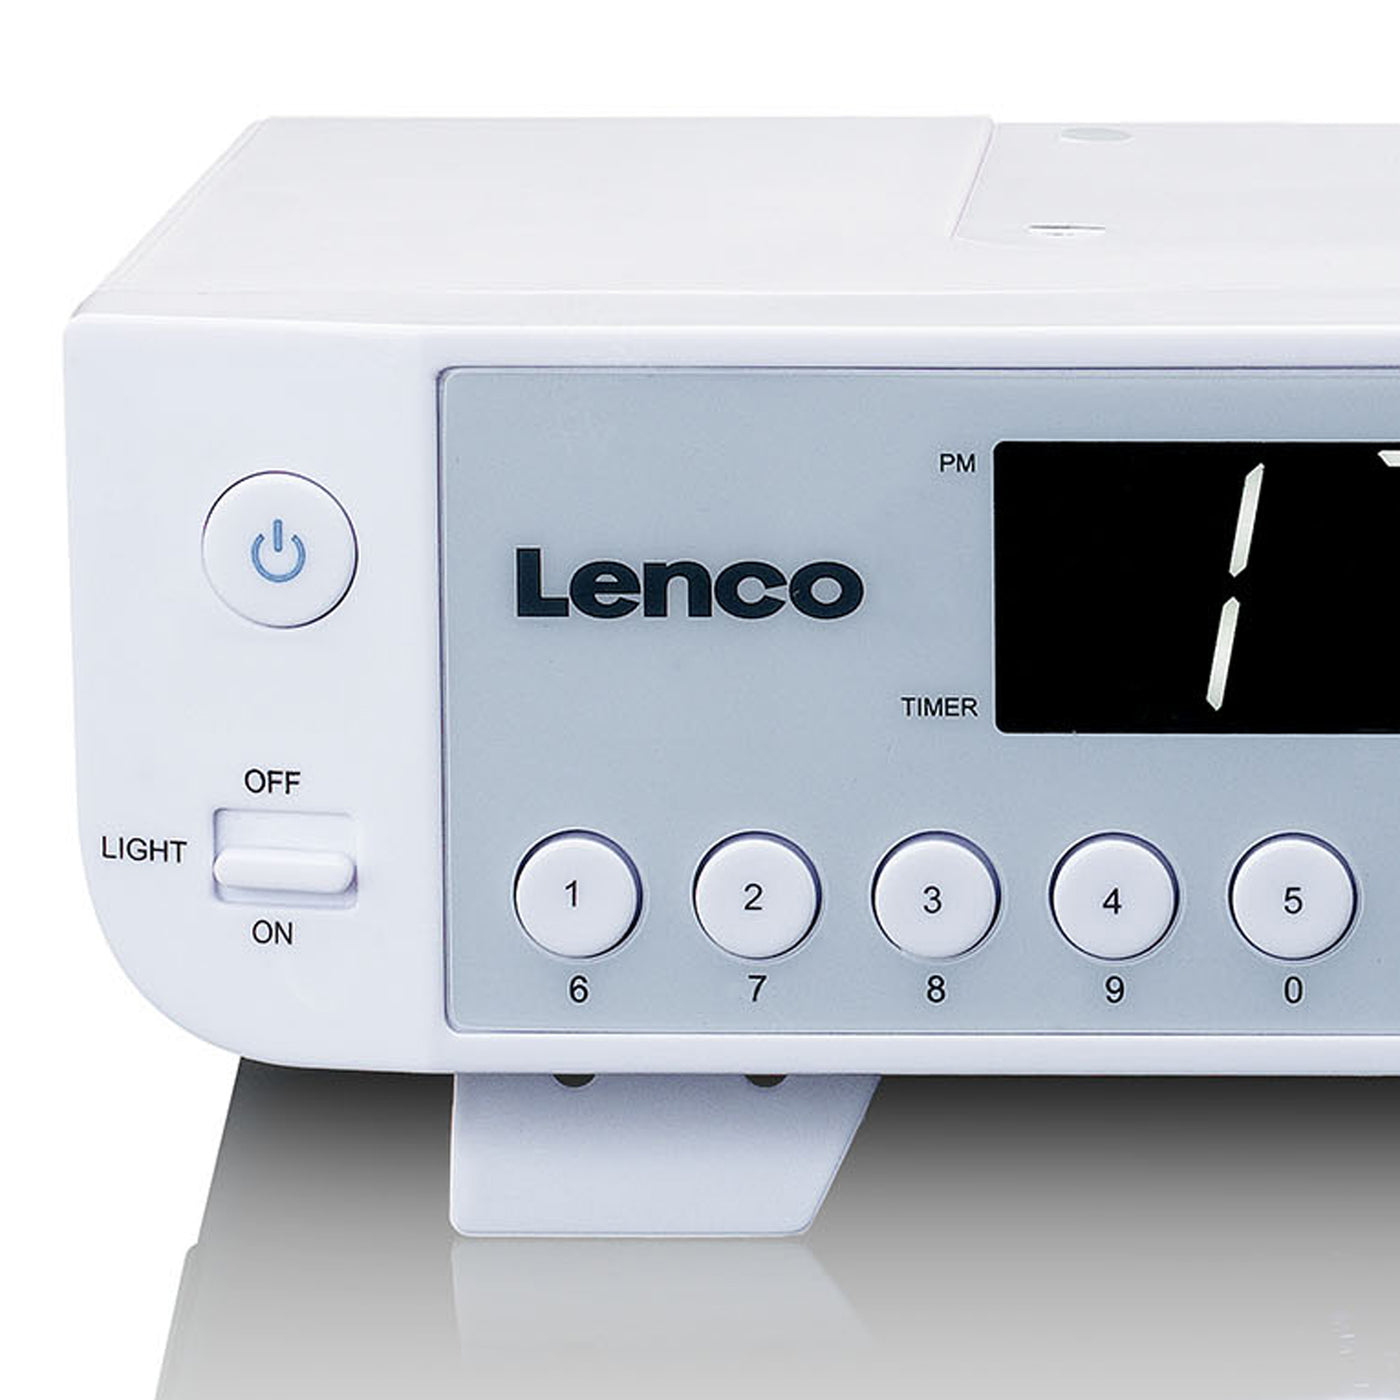 LENCO KCR-11WH Portable radio with LED lighting and timer